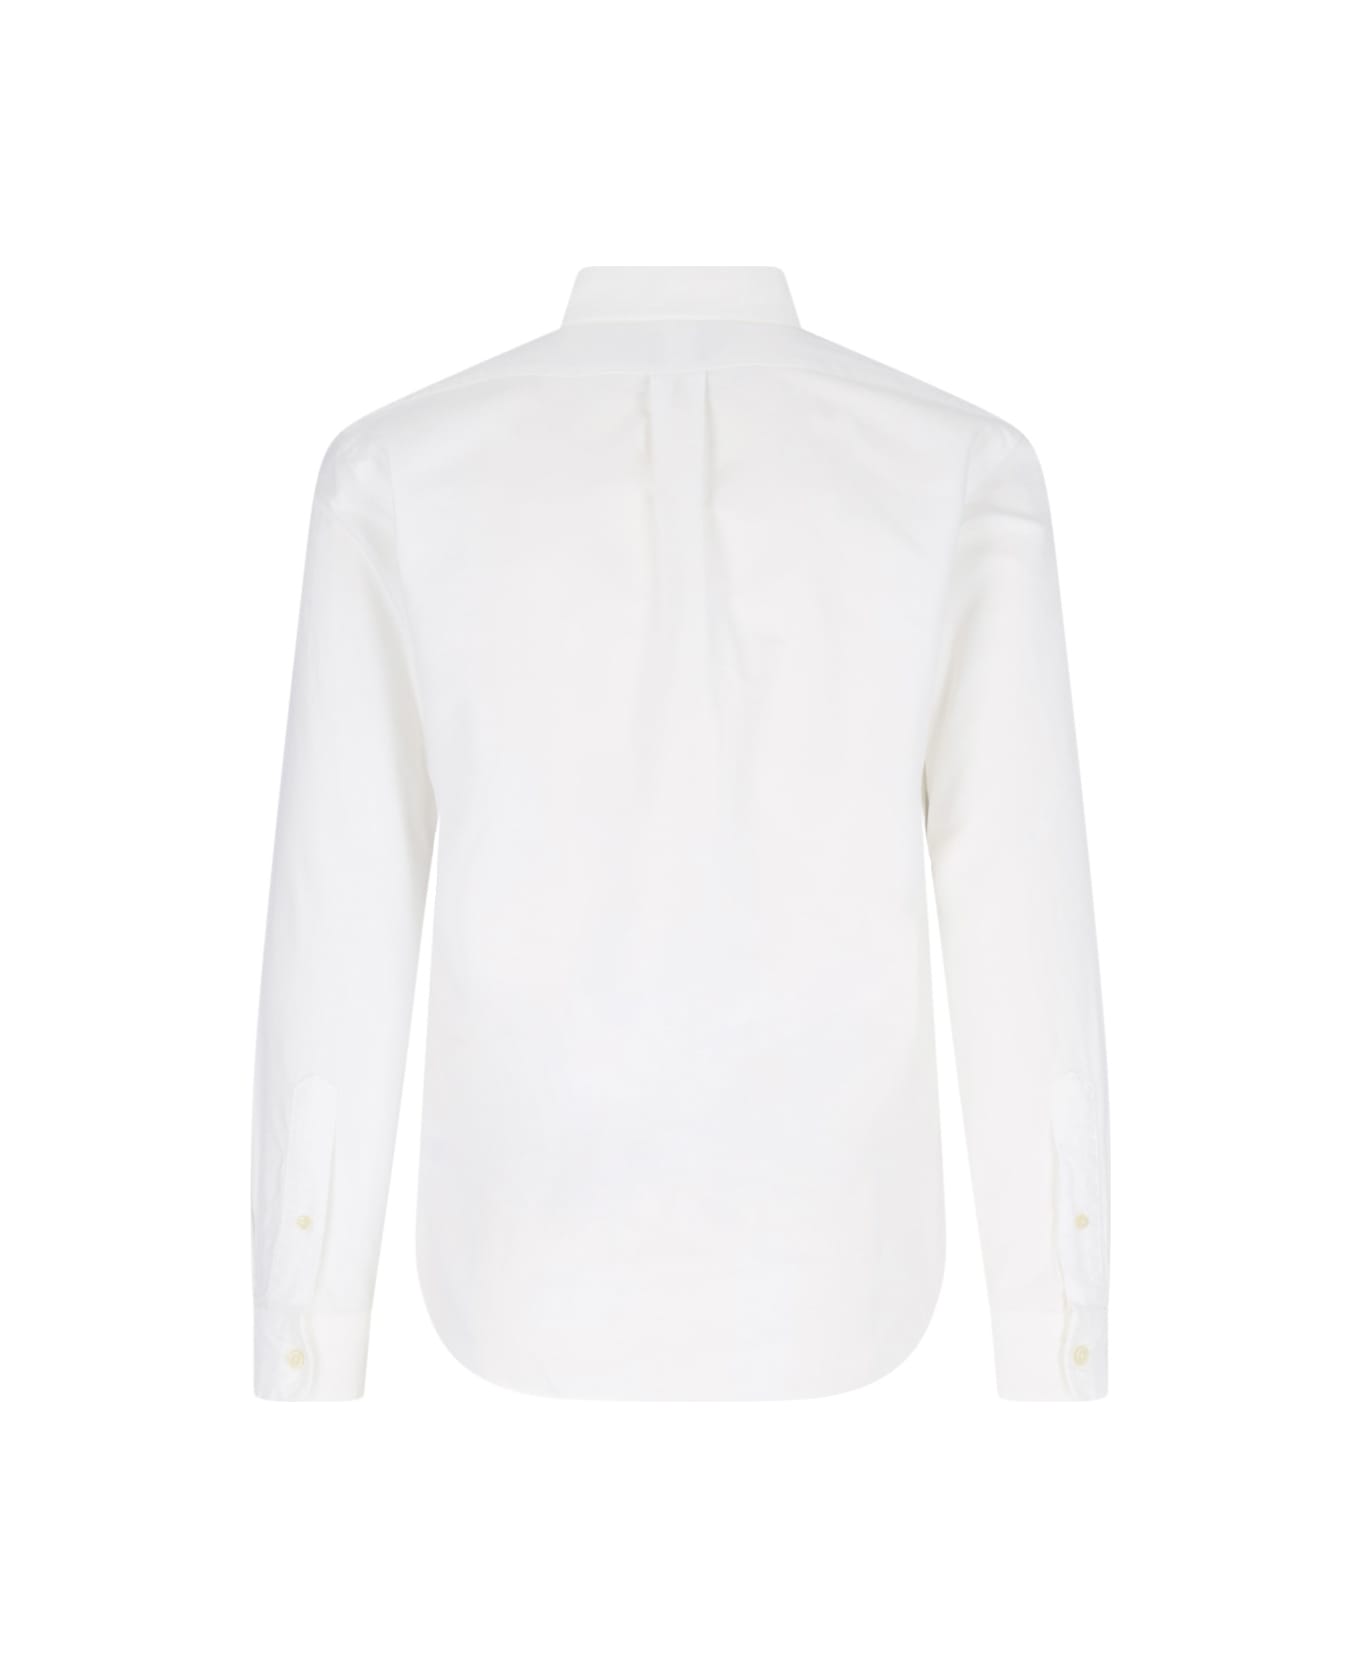 Ralph Lauren Logo Shirt - White